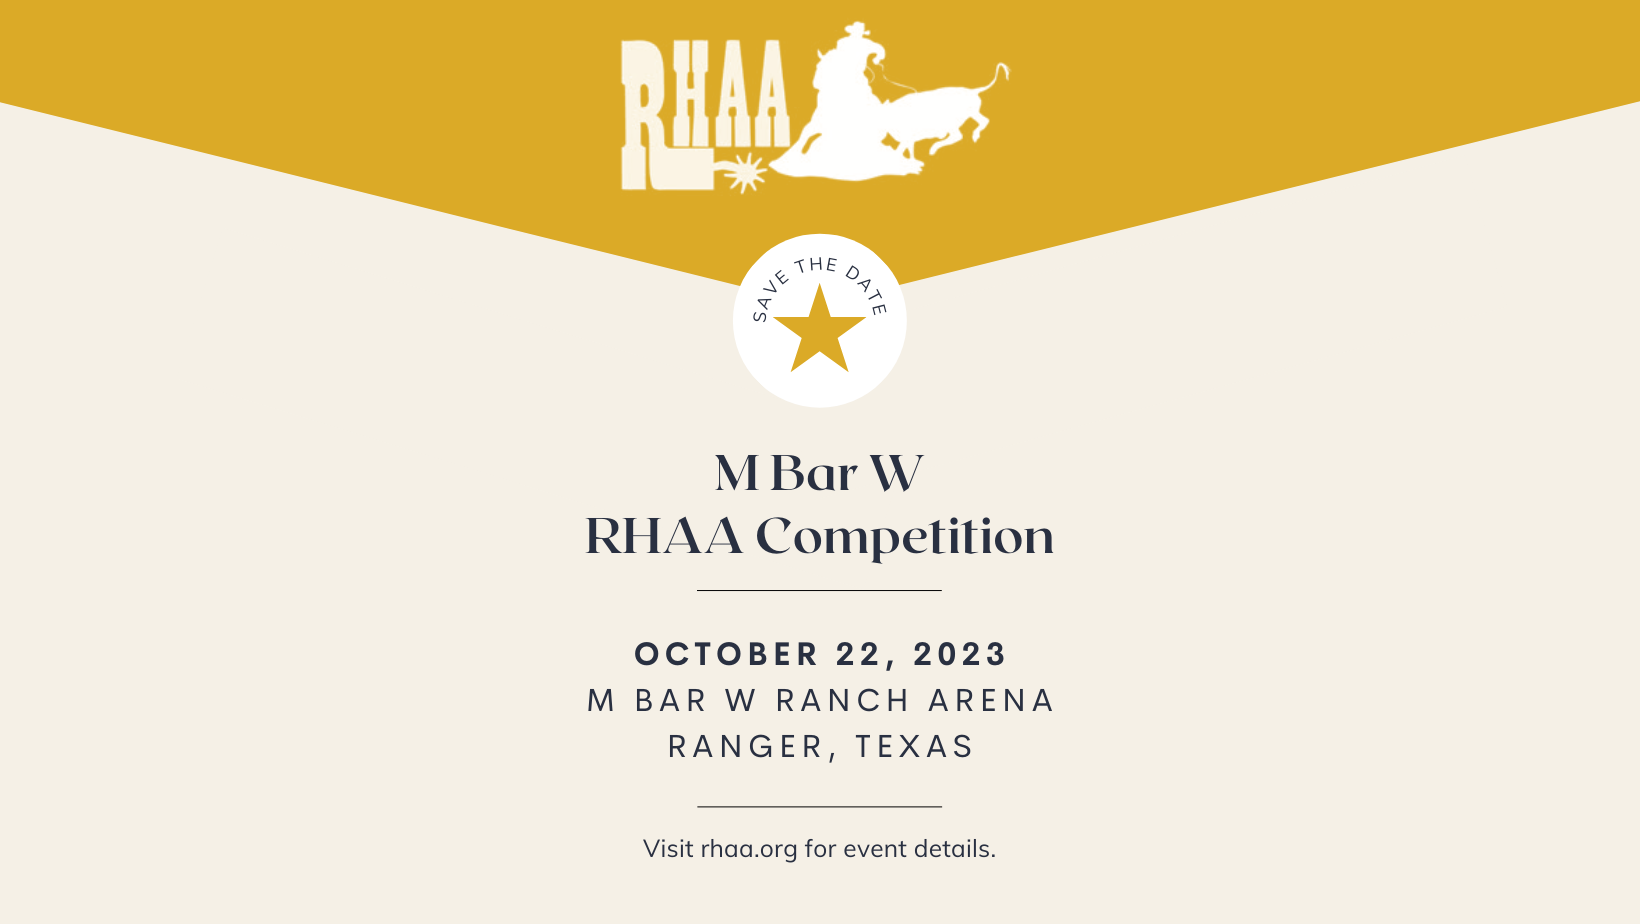 M Bar W RHAA Show info